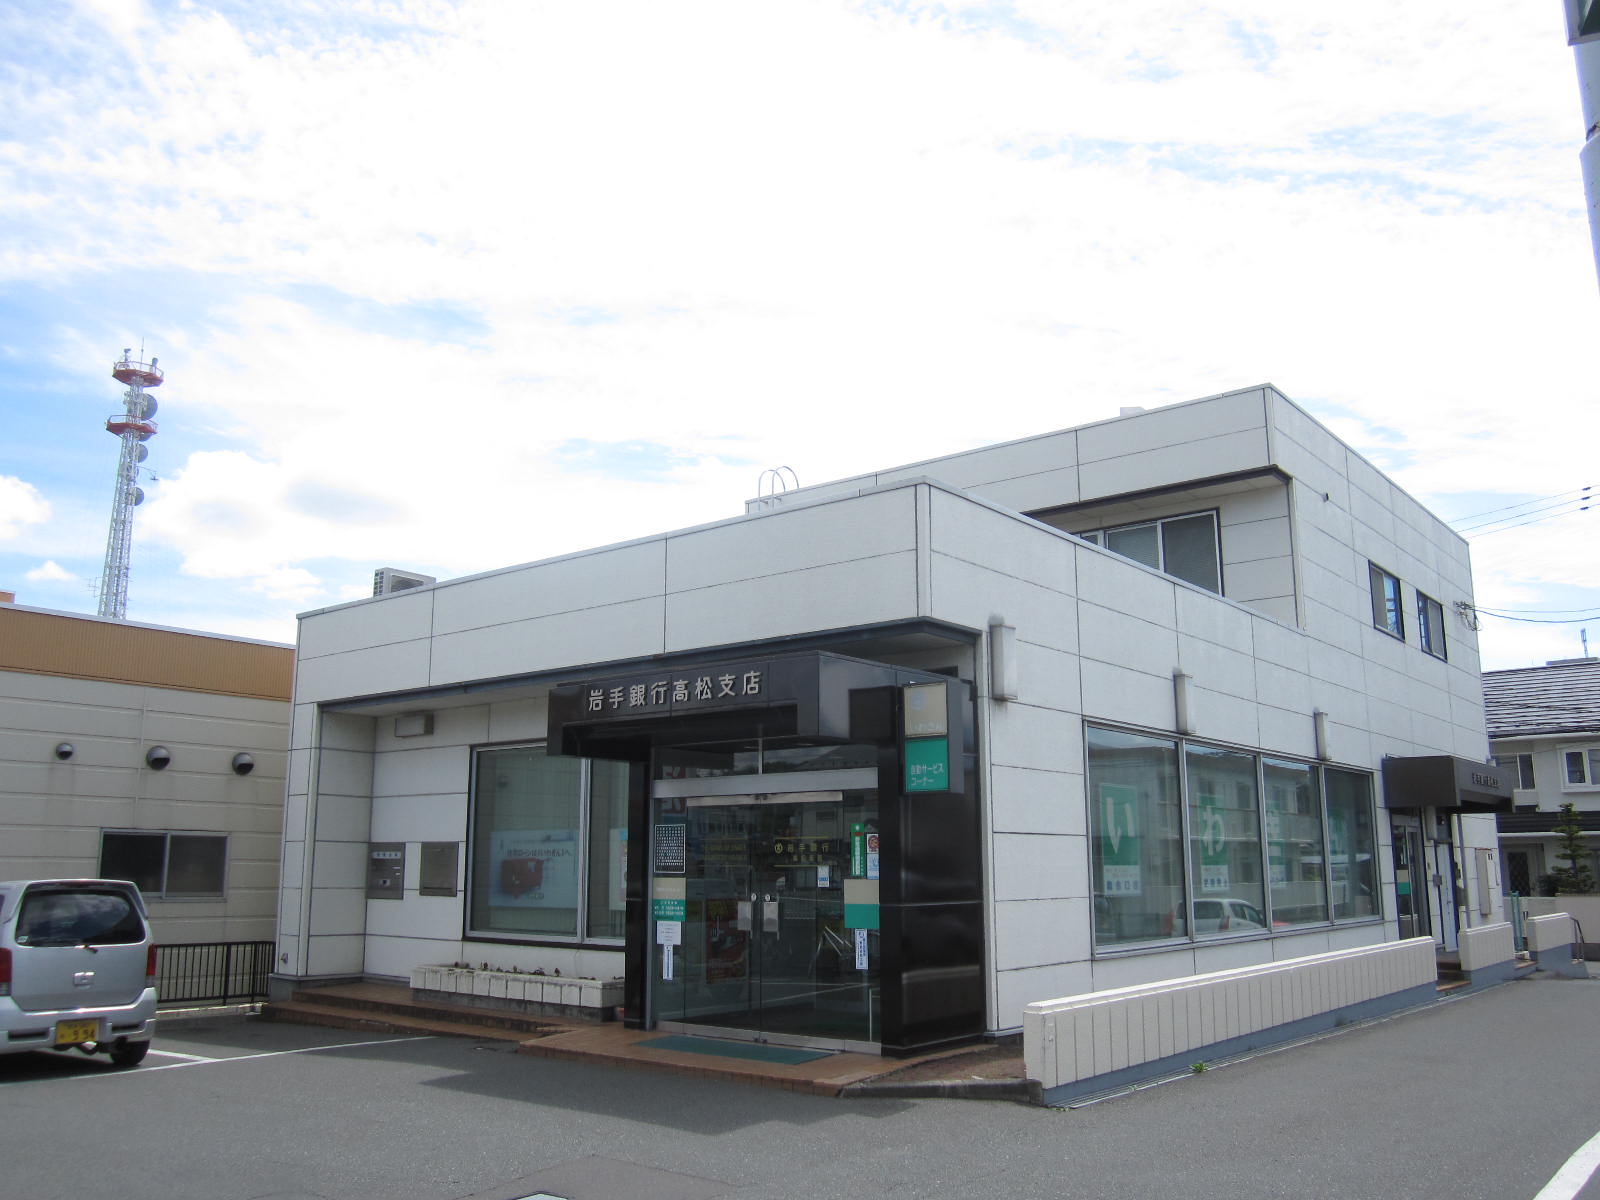 Bank. 519m to Iwate Takamatsu branch (Bank)